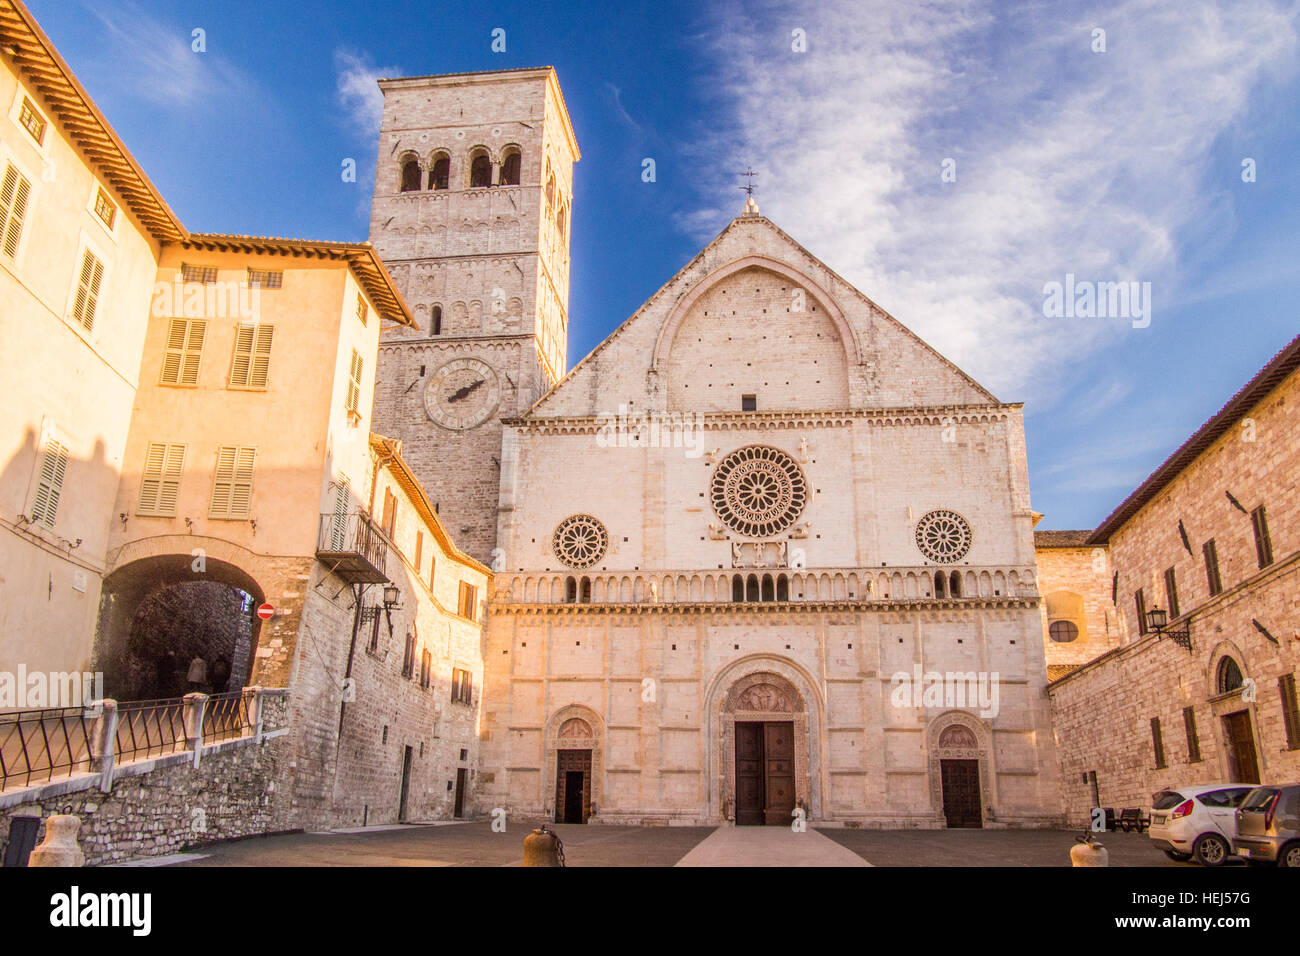 Cattedrale di San Rufino nella città di Assisi, Perugia provincia, regione Umbria, Italia. Foto Stock